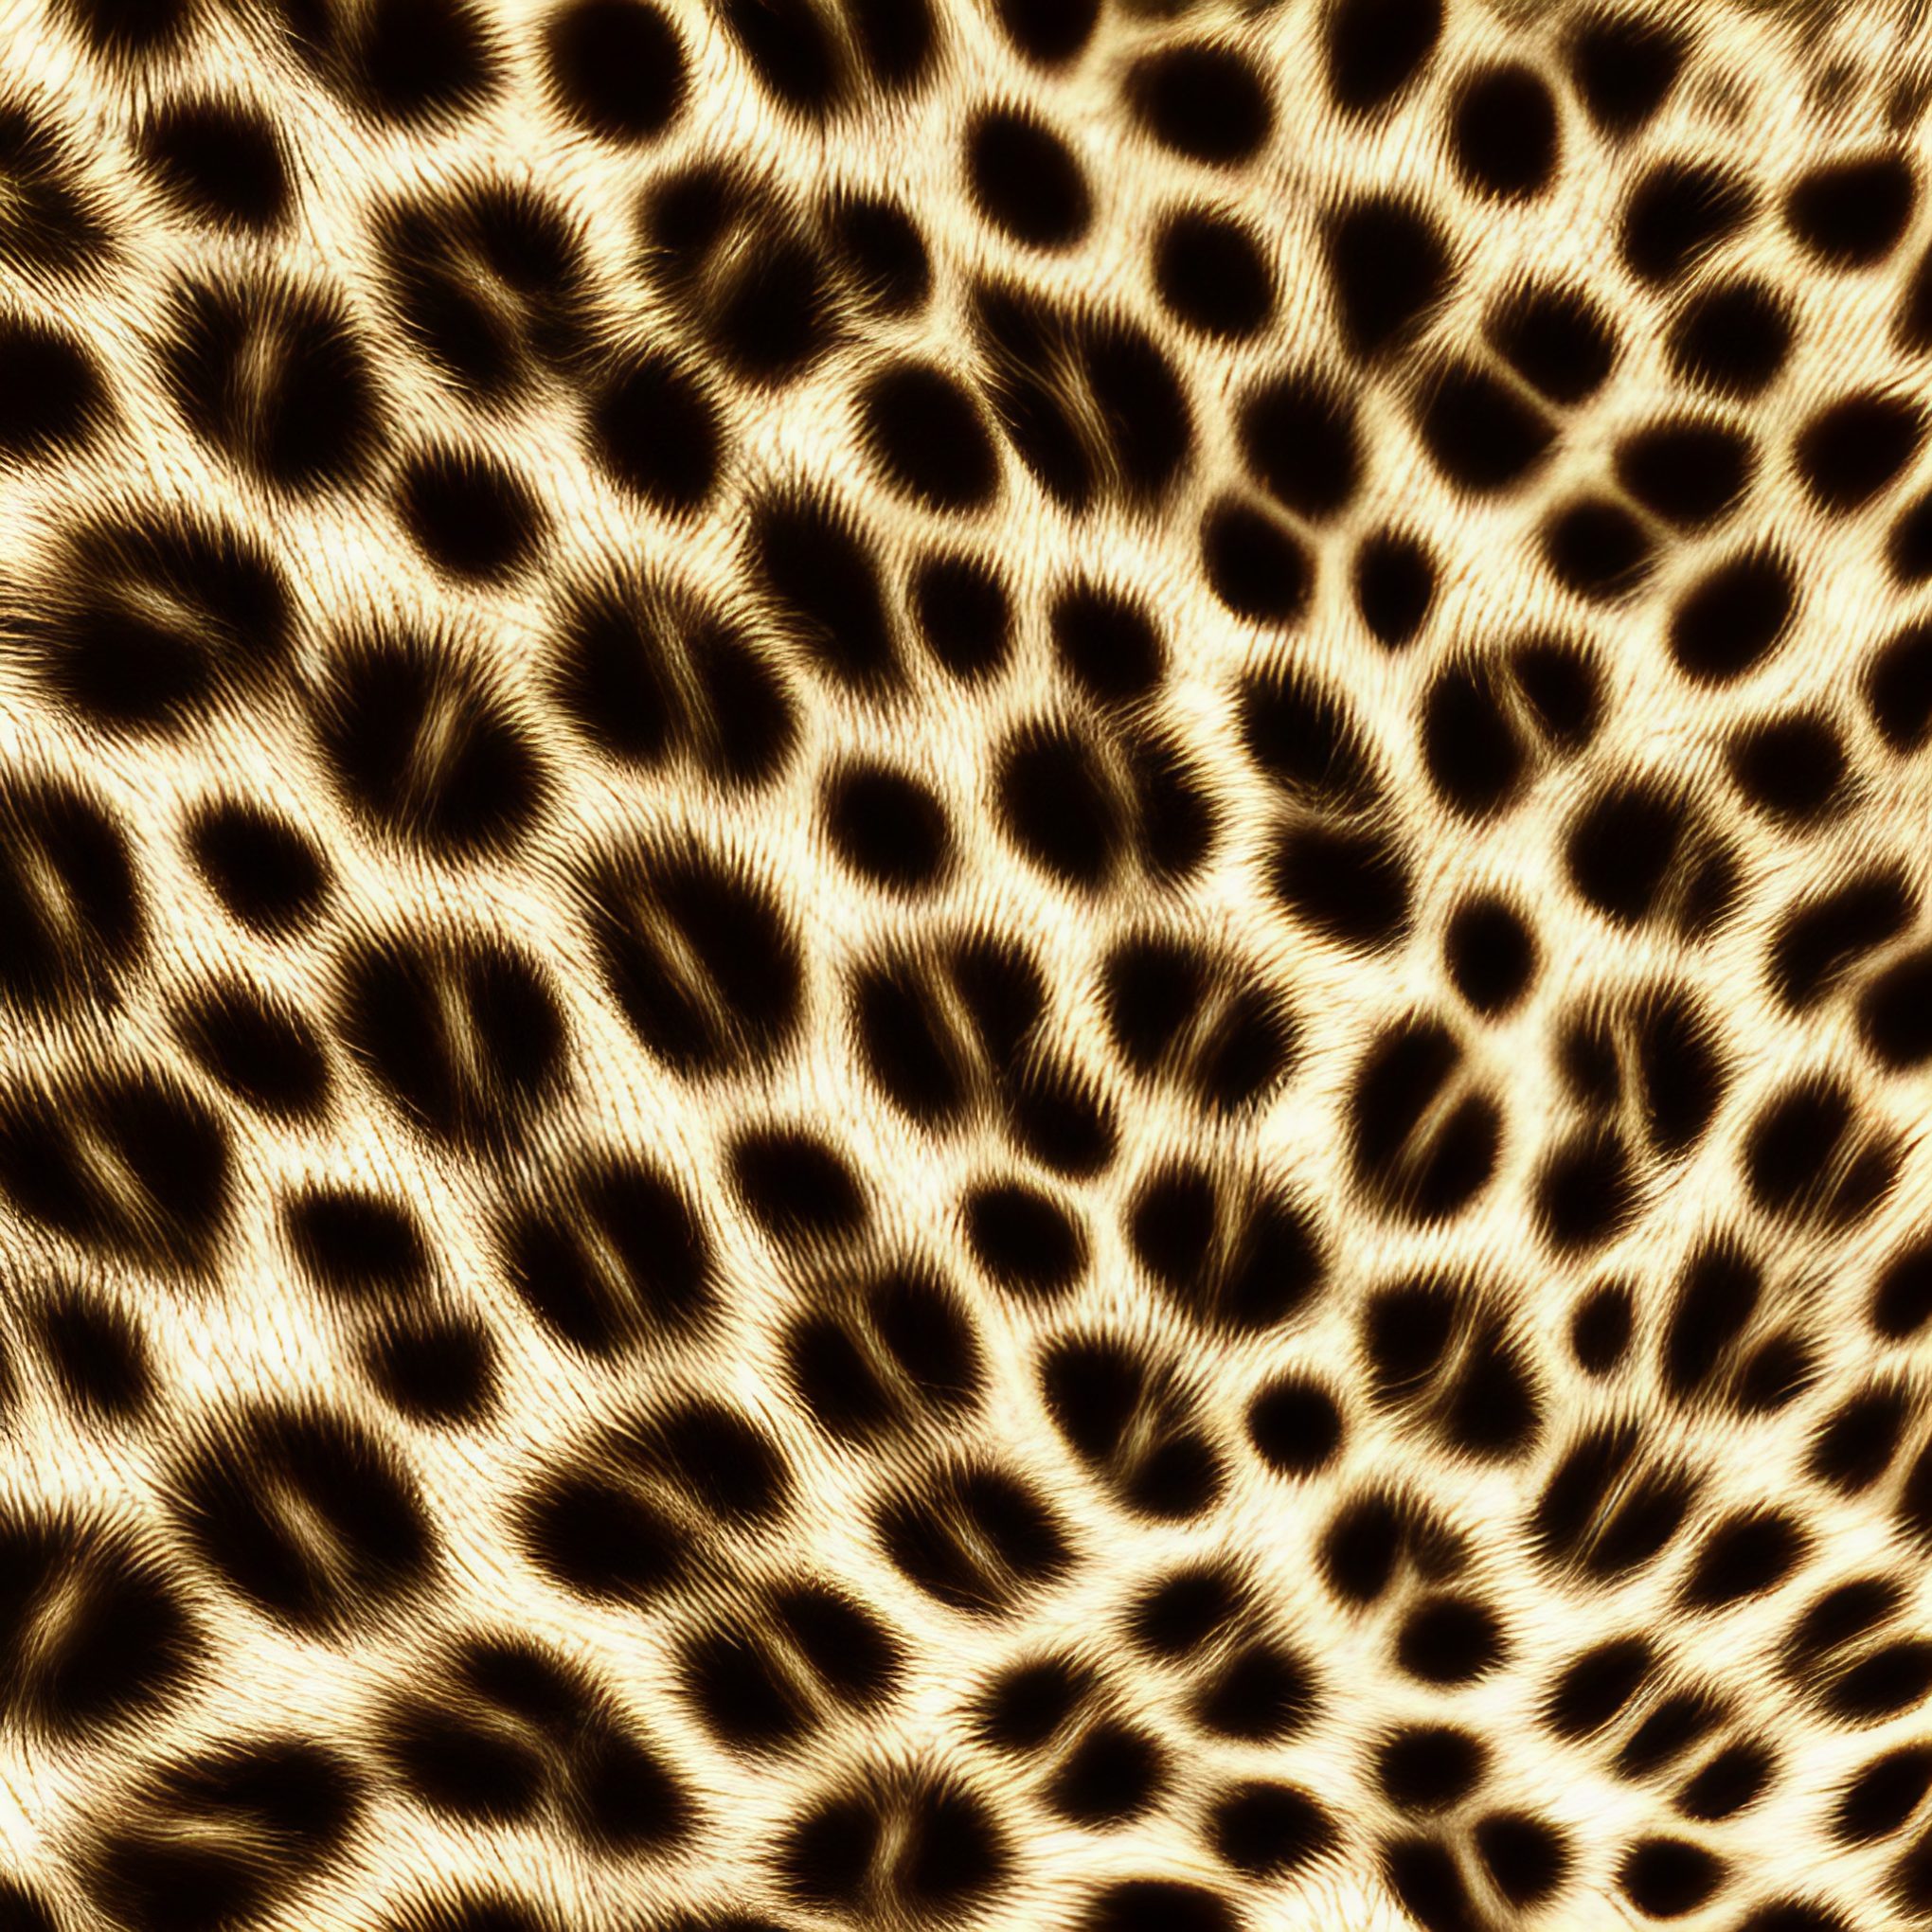 Leopard Spots Animal Print Free Stock Image